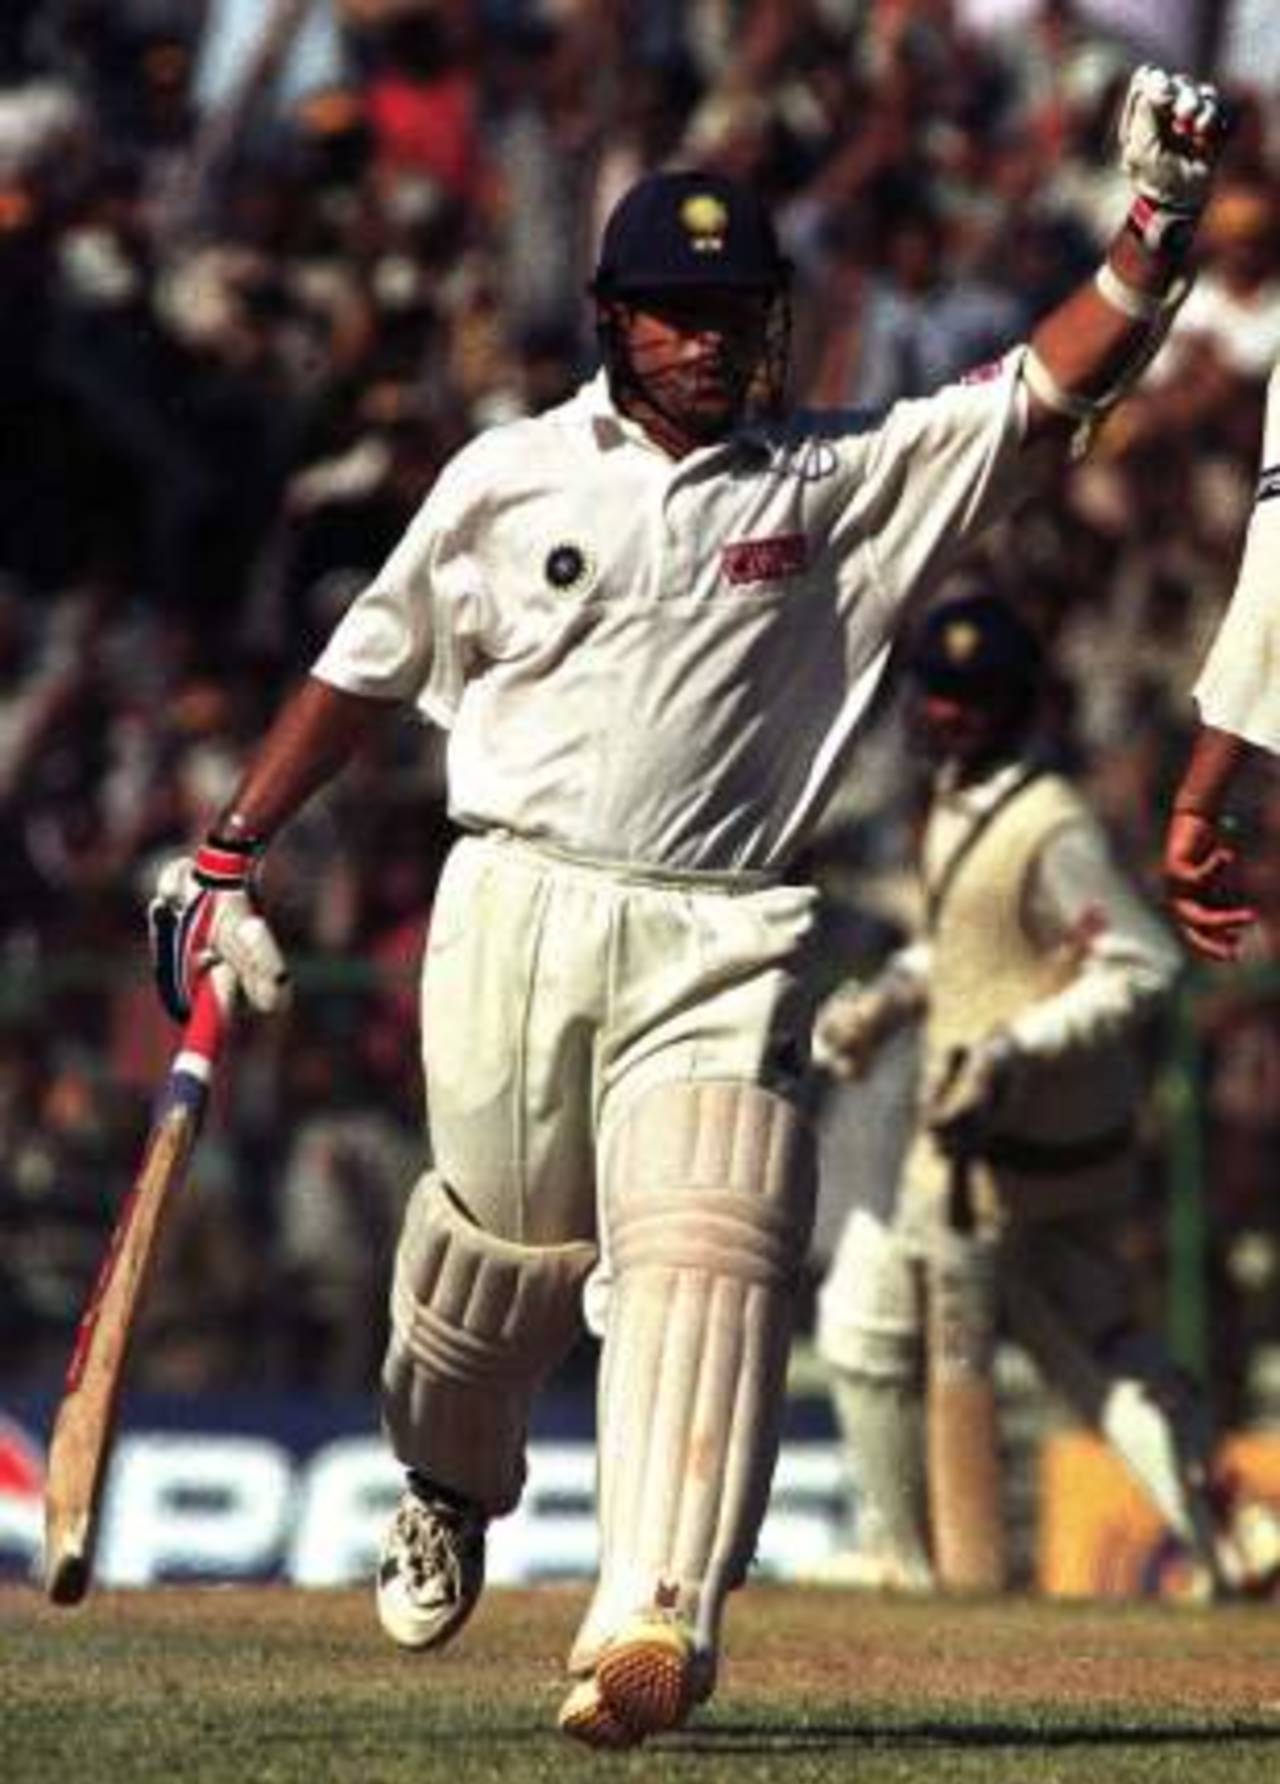 Sachin Tendulkar, hampered by a bad back, reaches his hundred, India v Pakistan, 1st Test, Chennai, January 28-31, 1999